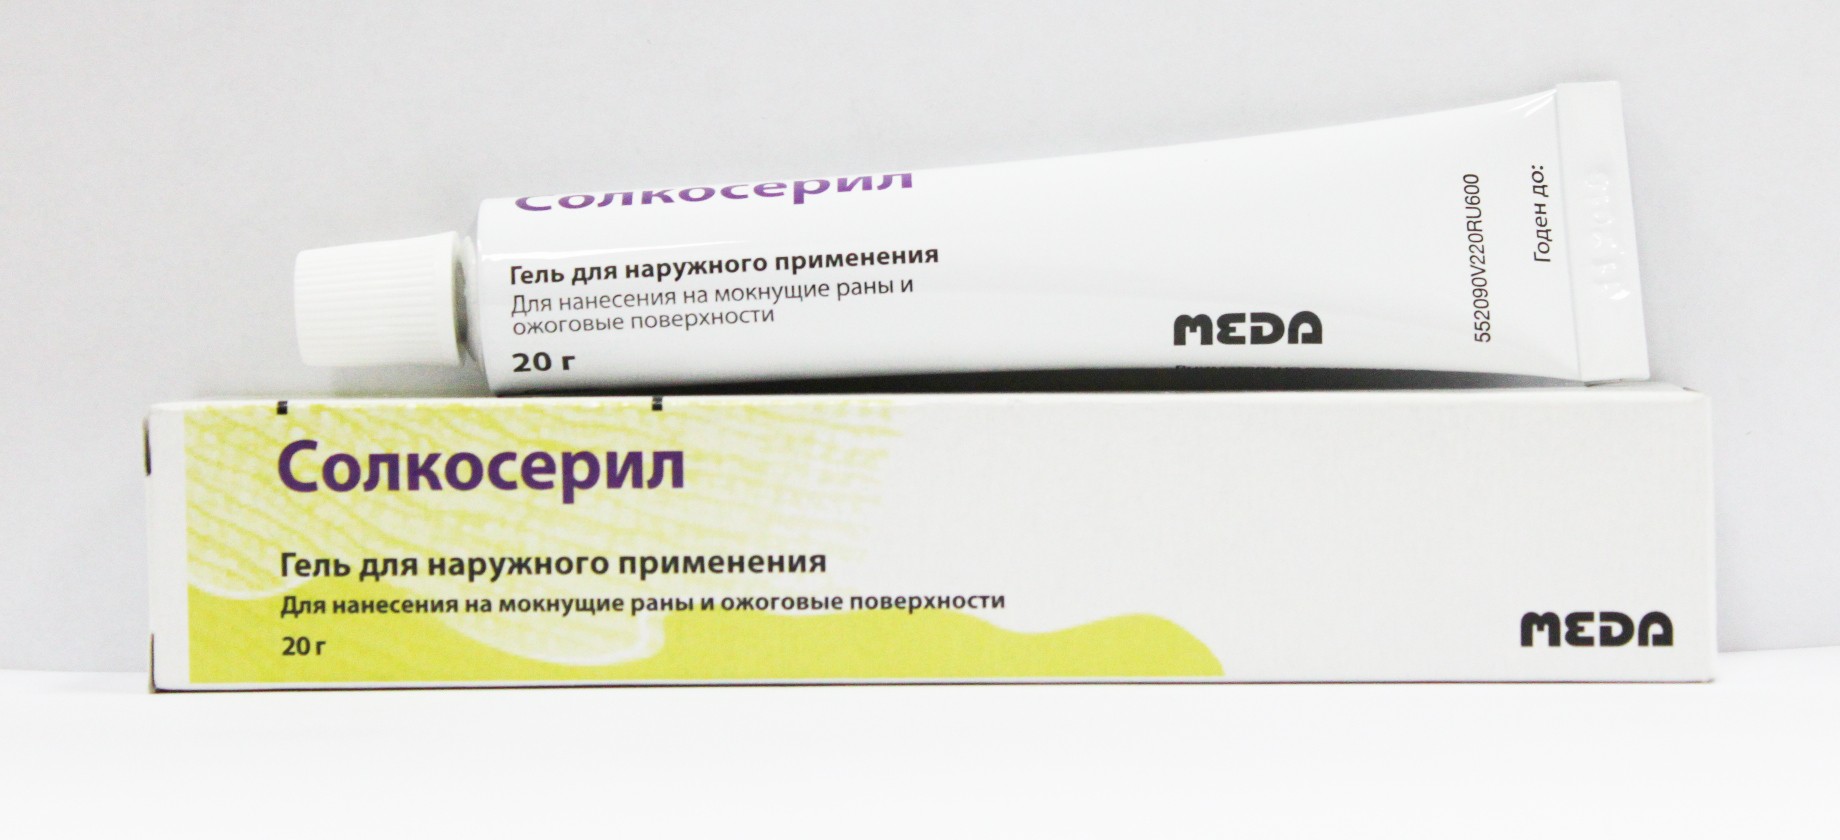 Актовегин: аналоги препарата в таблетках, ампулах и в других формах выпуска